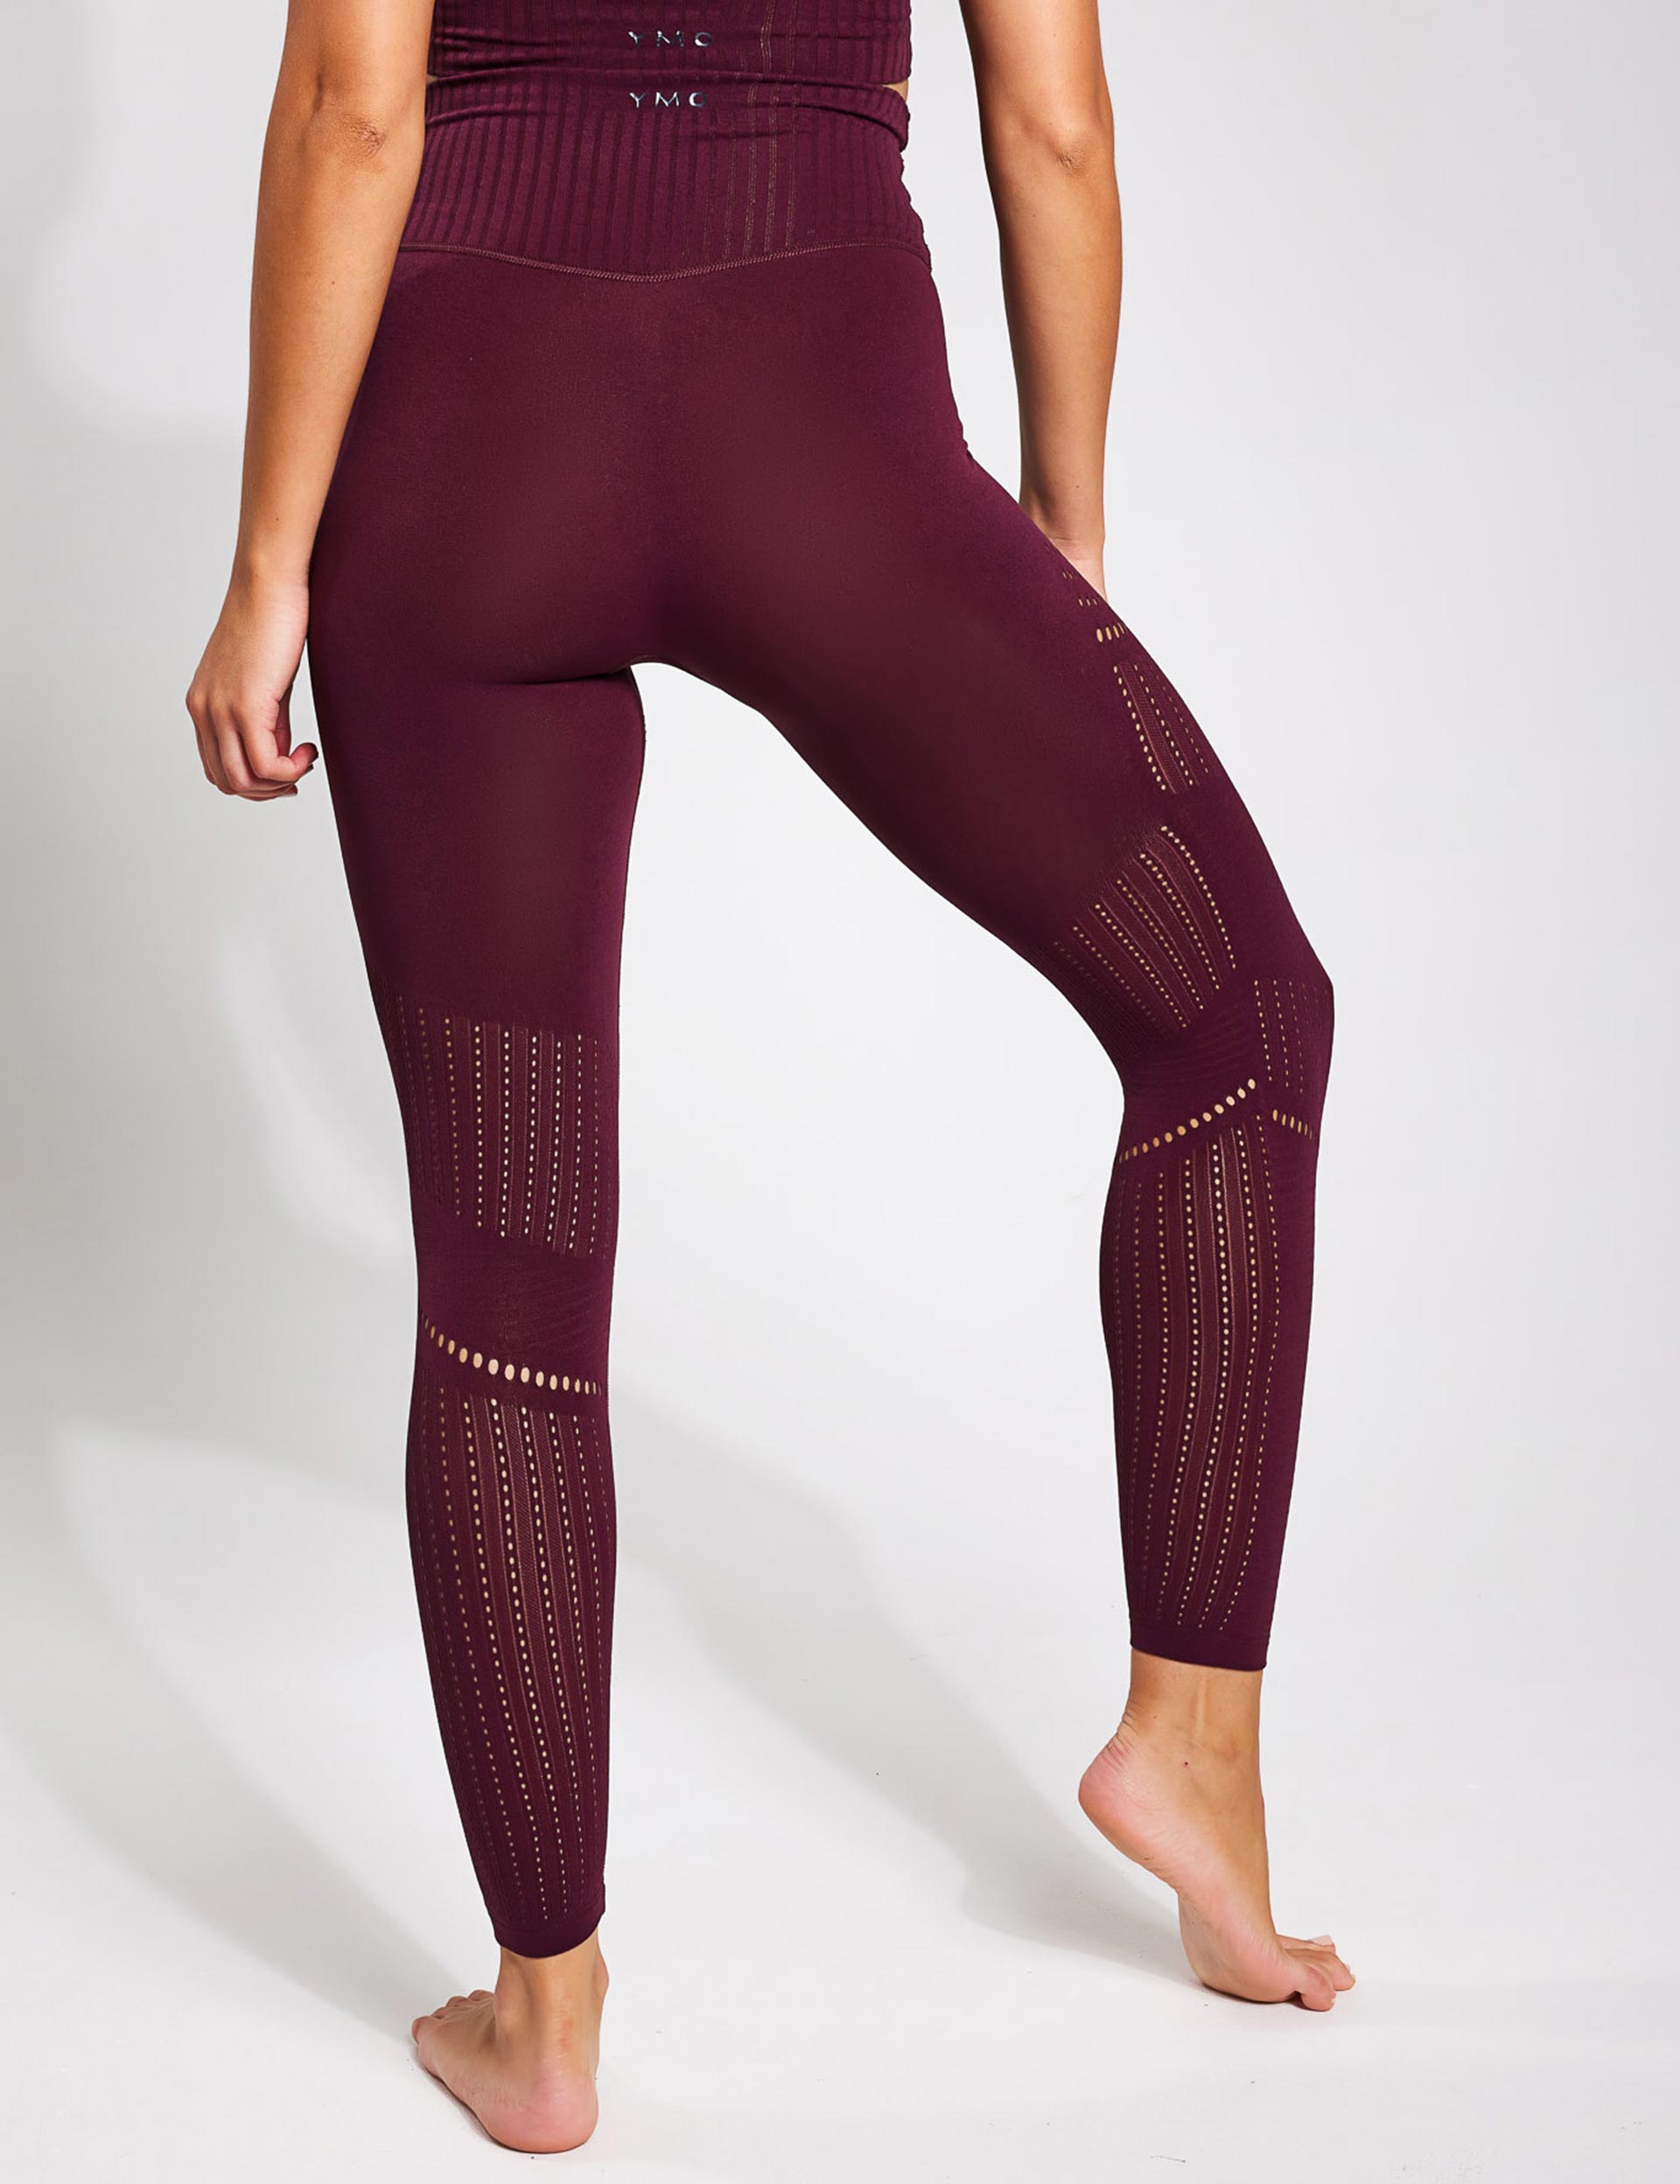 Victoria Secret Sport Seamless 7/8 Tight Pant Leggings Yoga Black Pink XL S  NEW